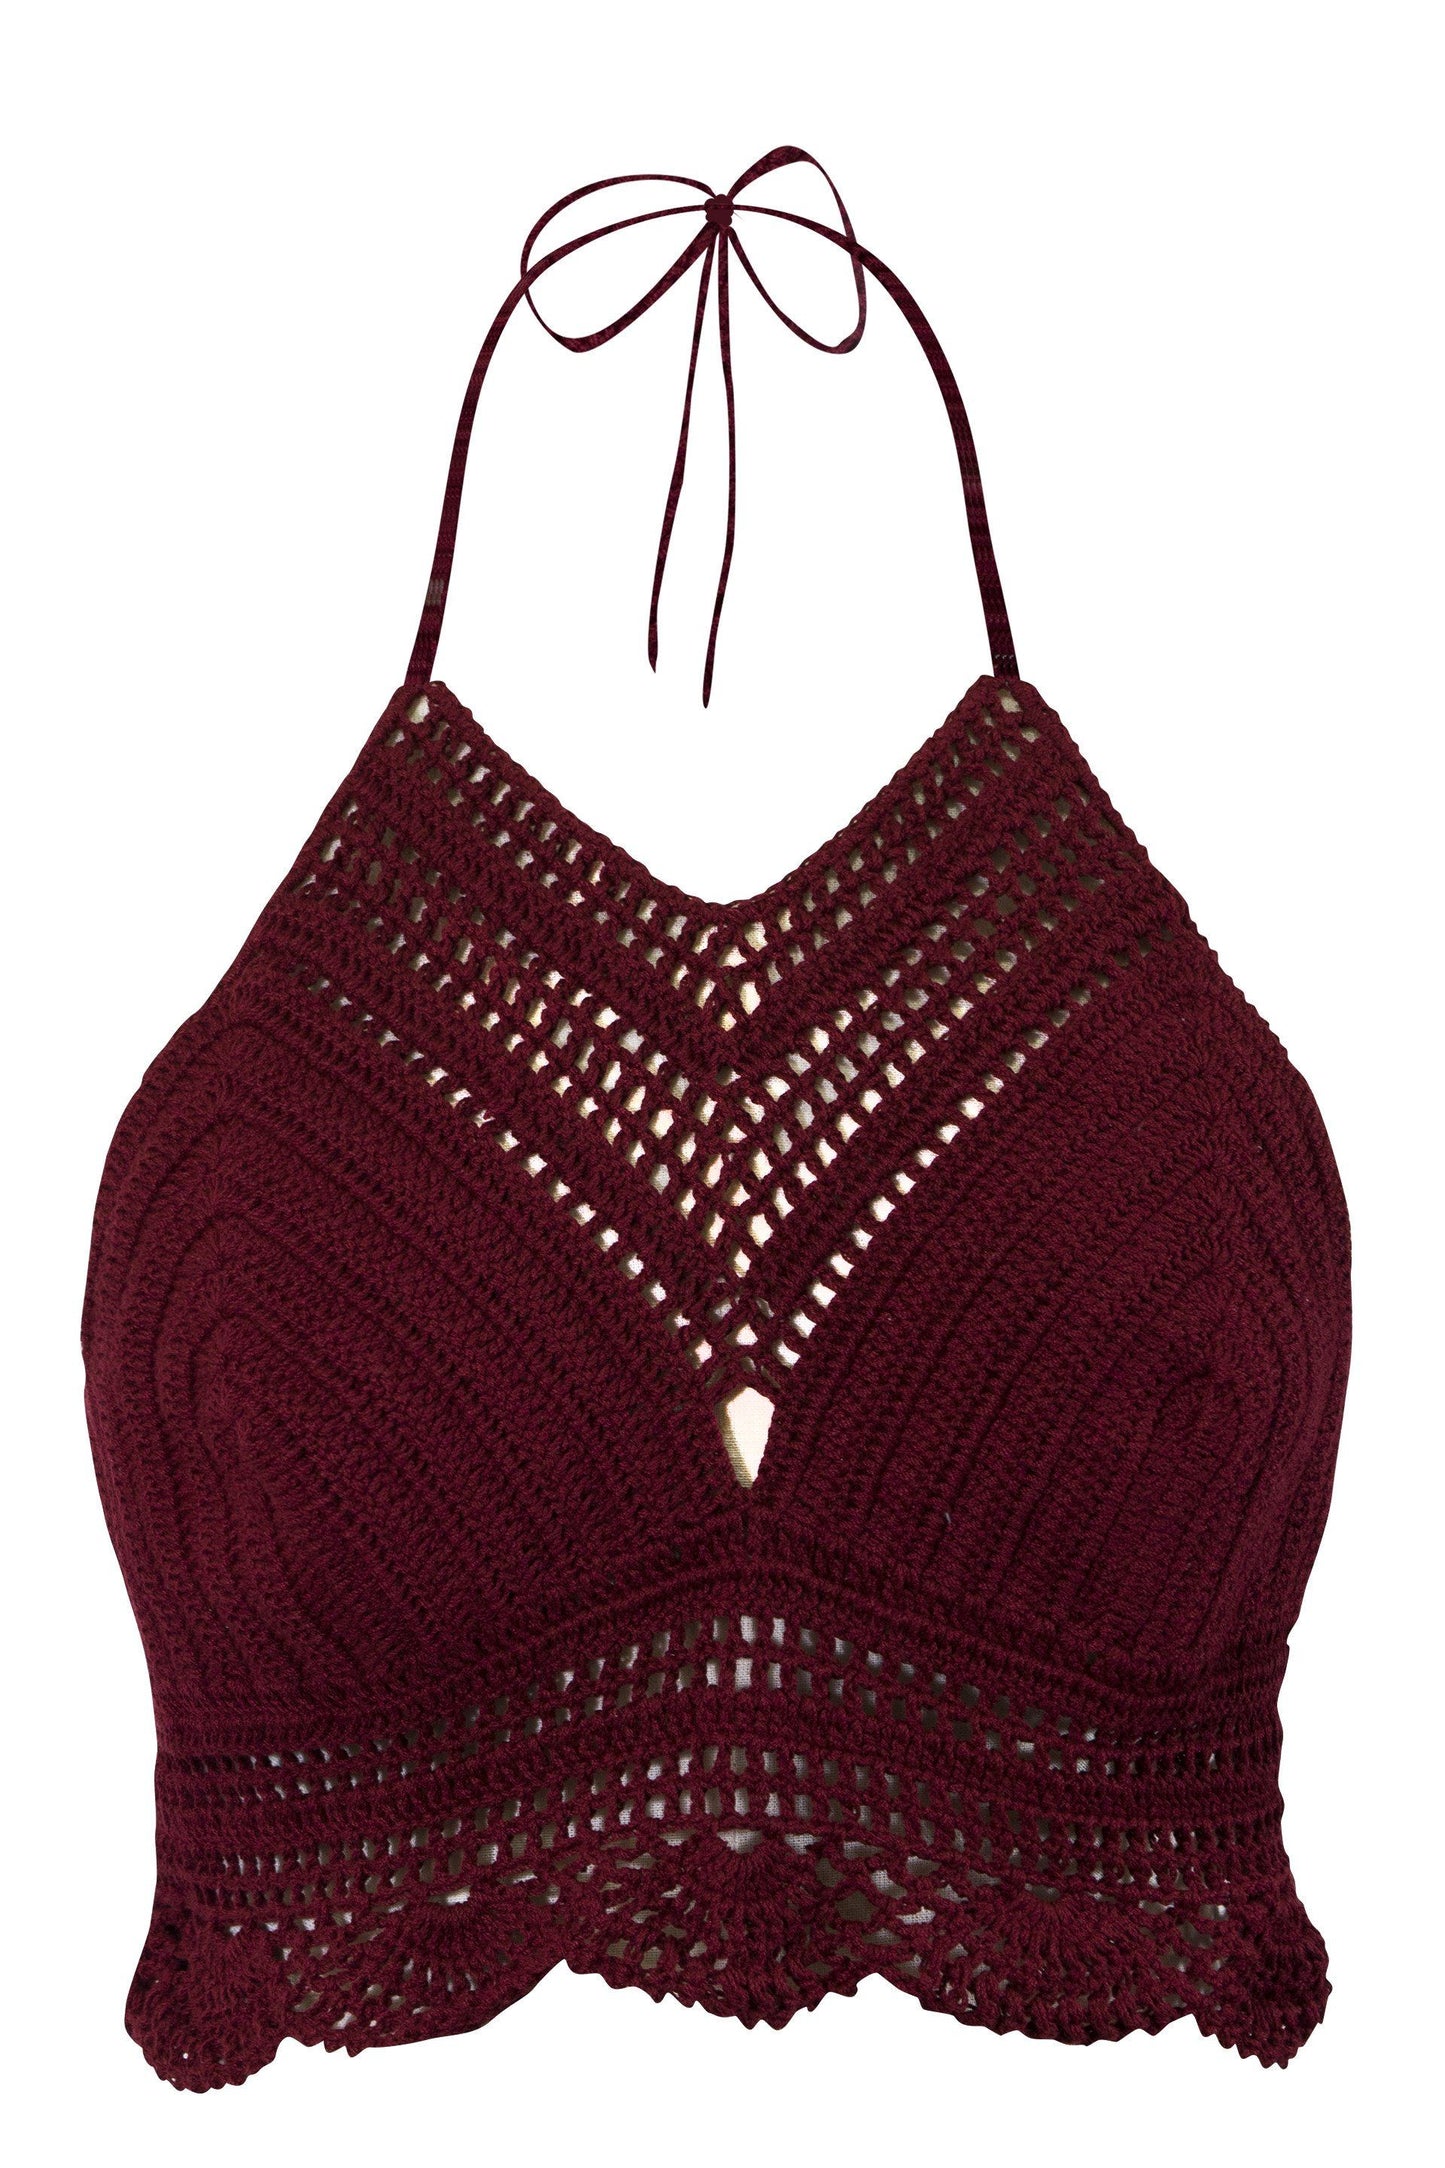 Crochet Bikini Top Halter Neck - CCCollections